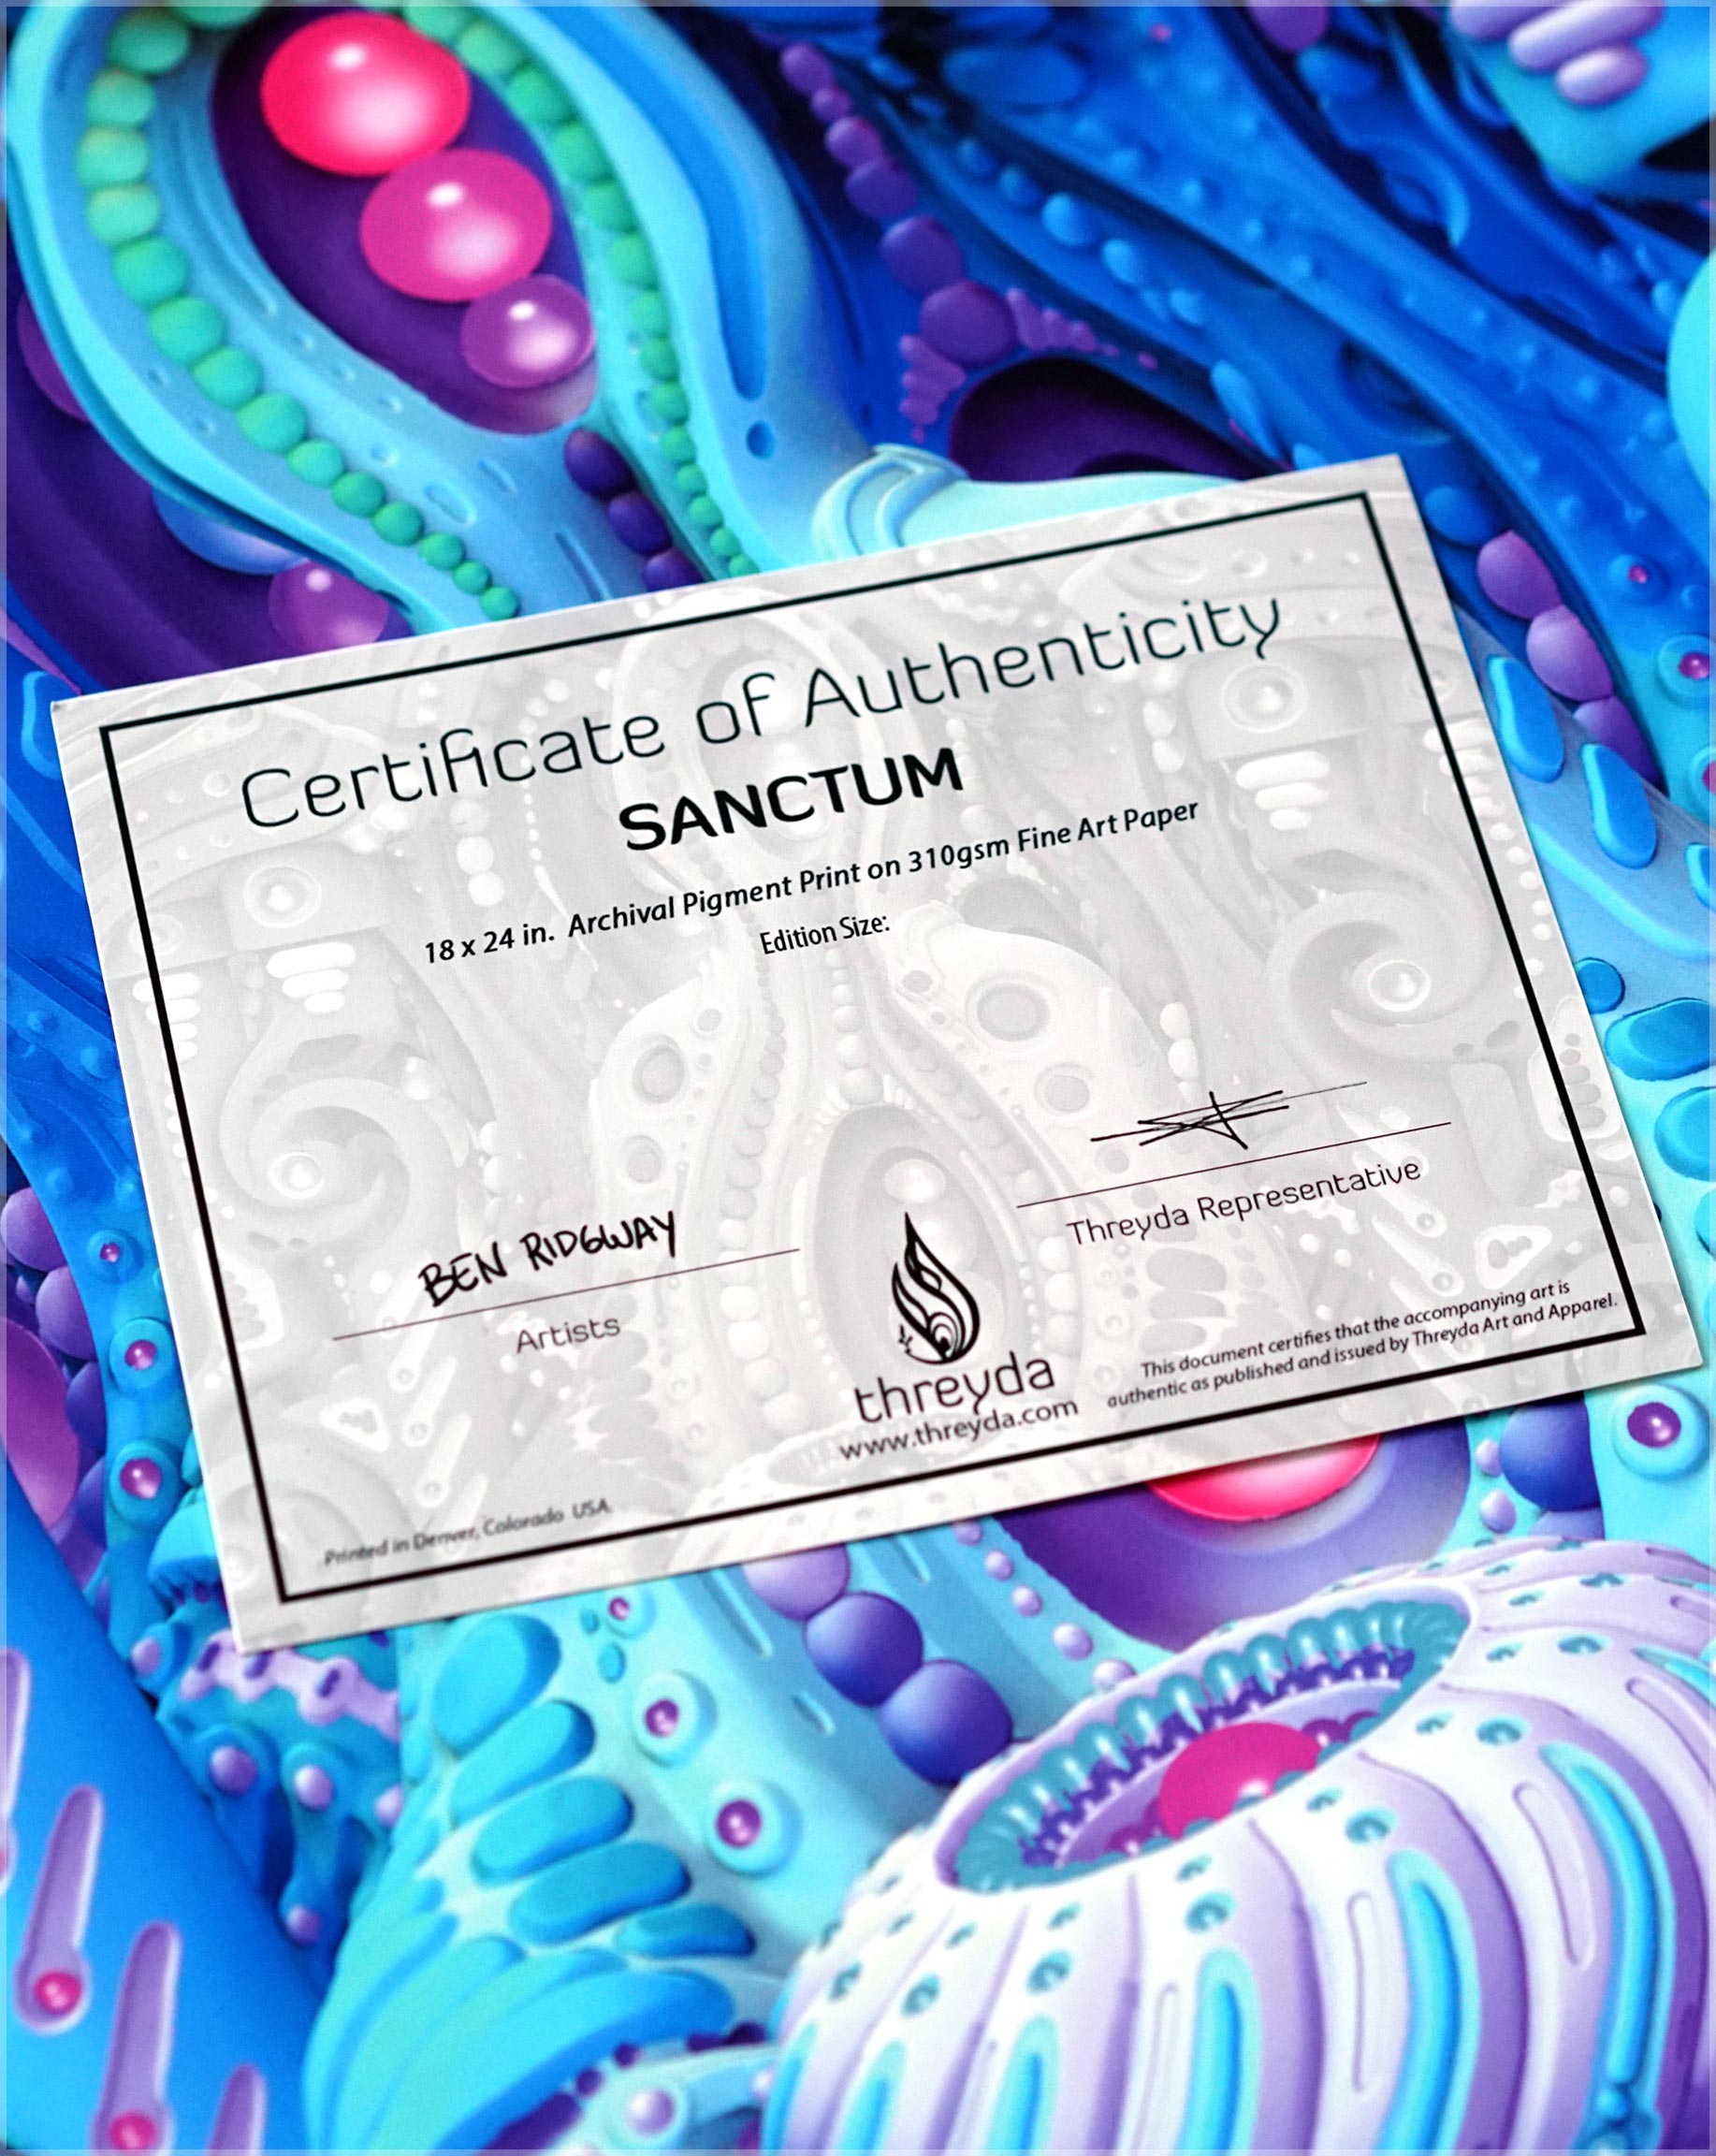 Sanctum Signed Print by Ben Ridgway - 24 Hour Release